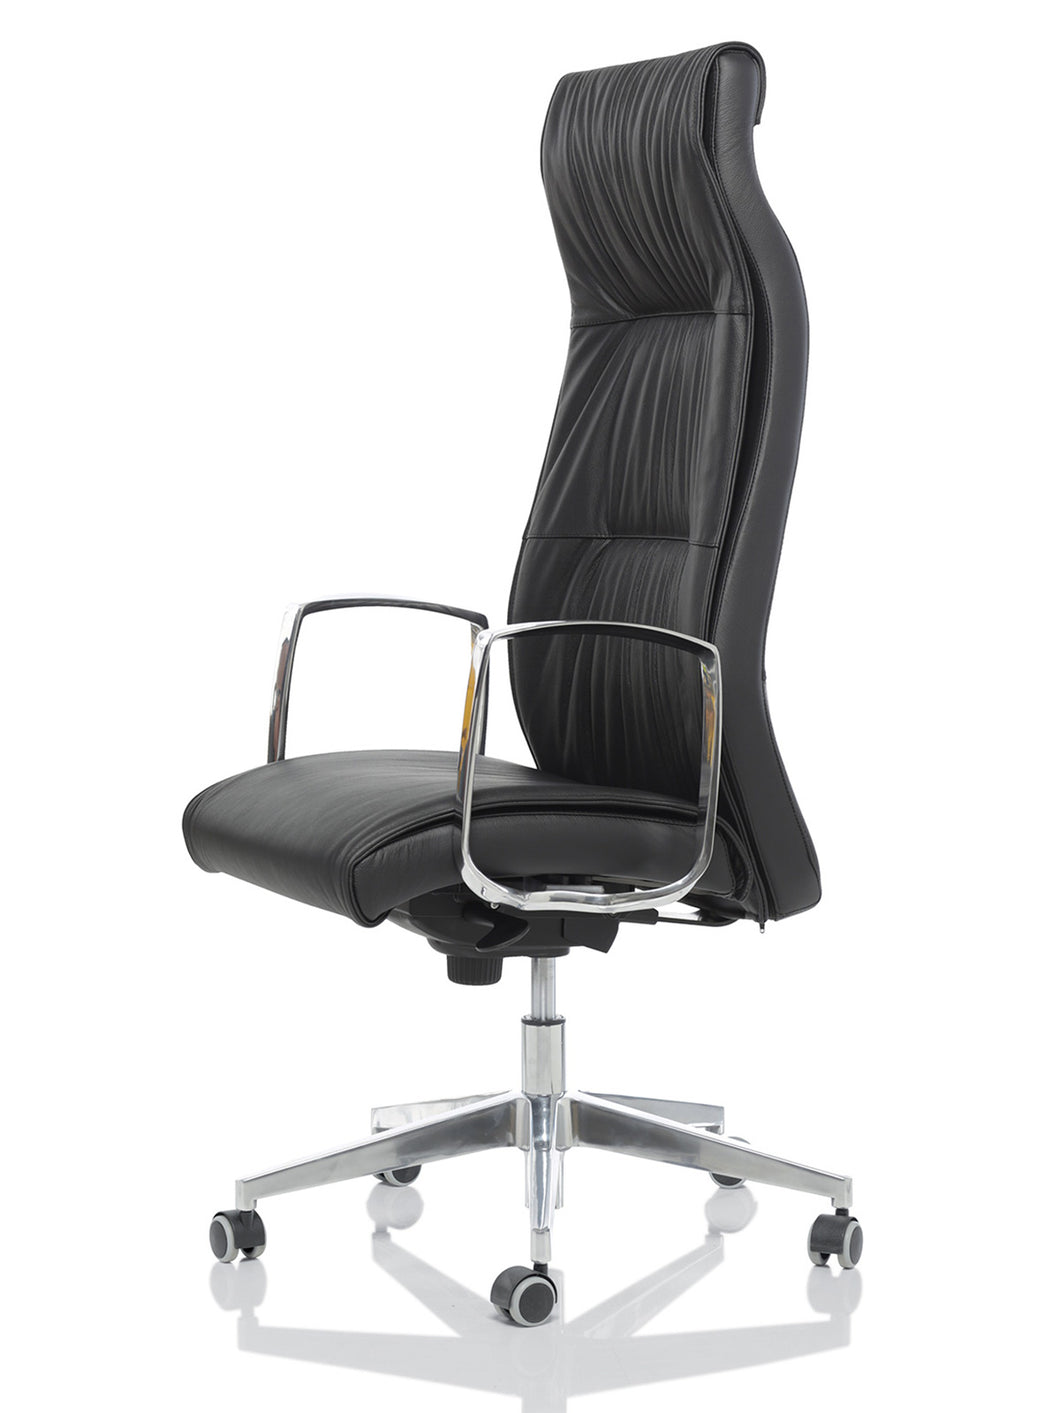 London - Executive High Back Leather Chair.